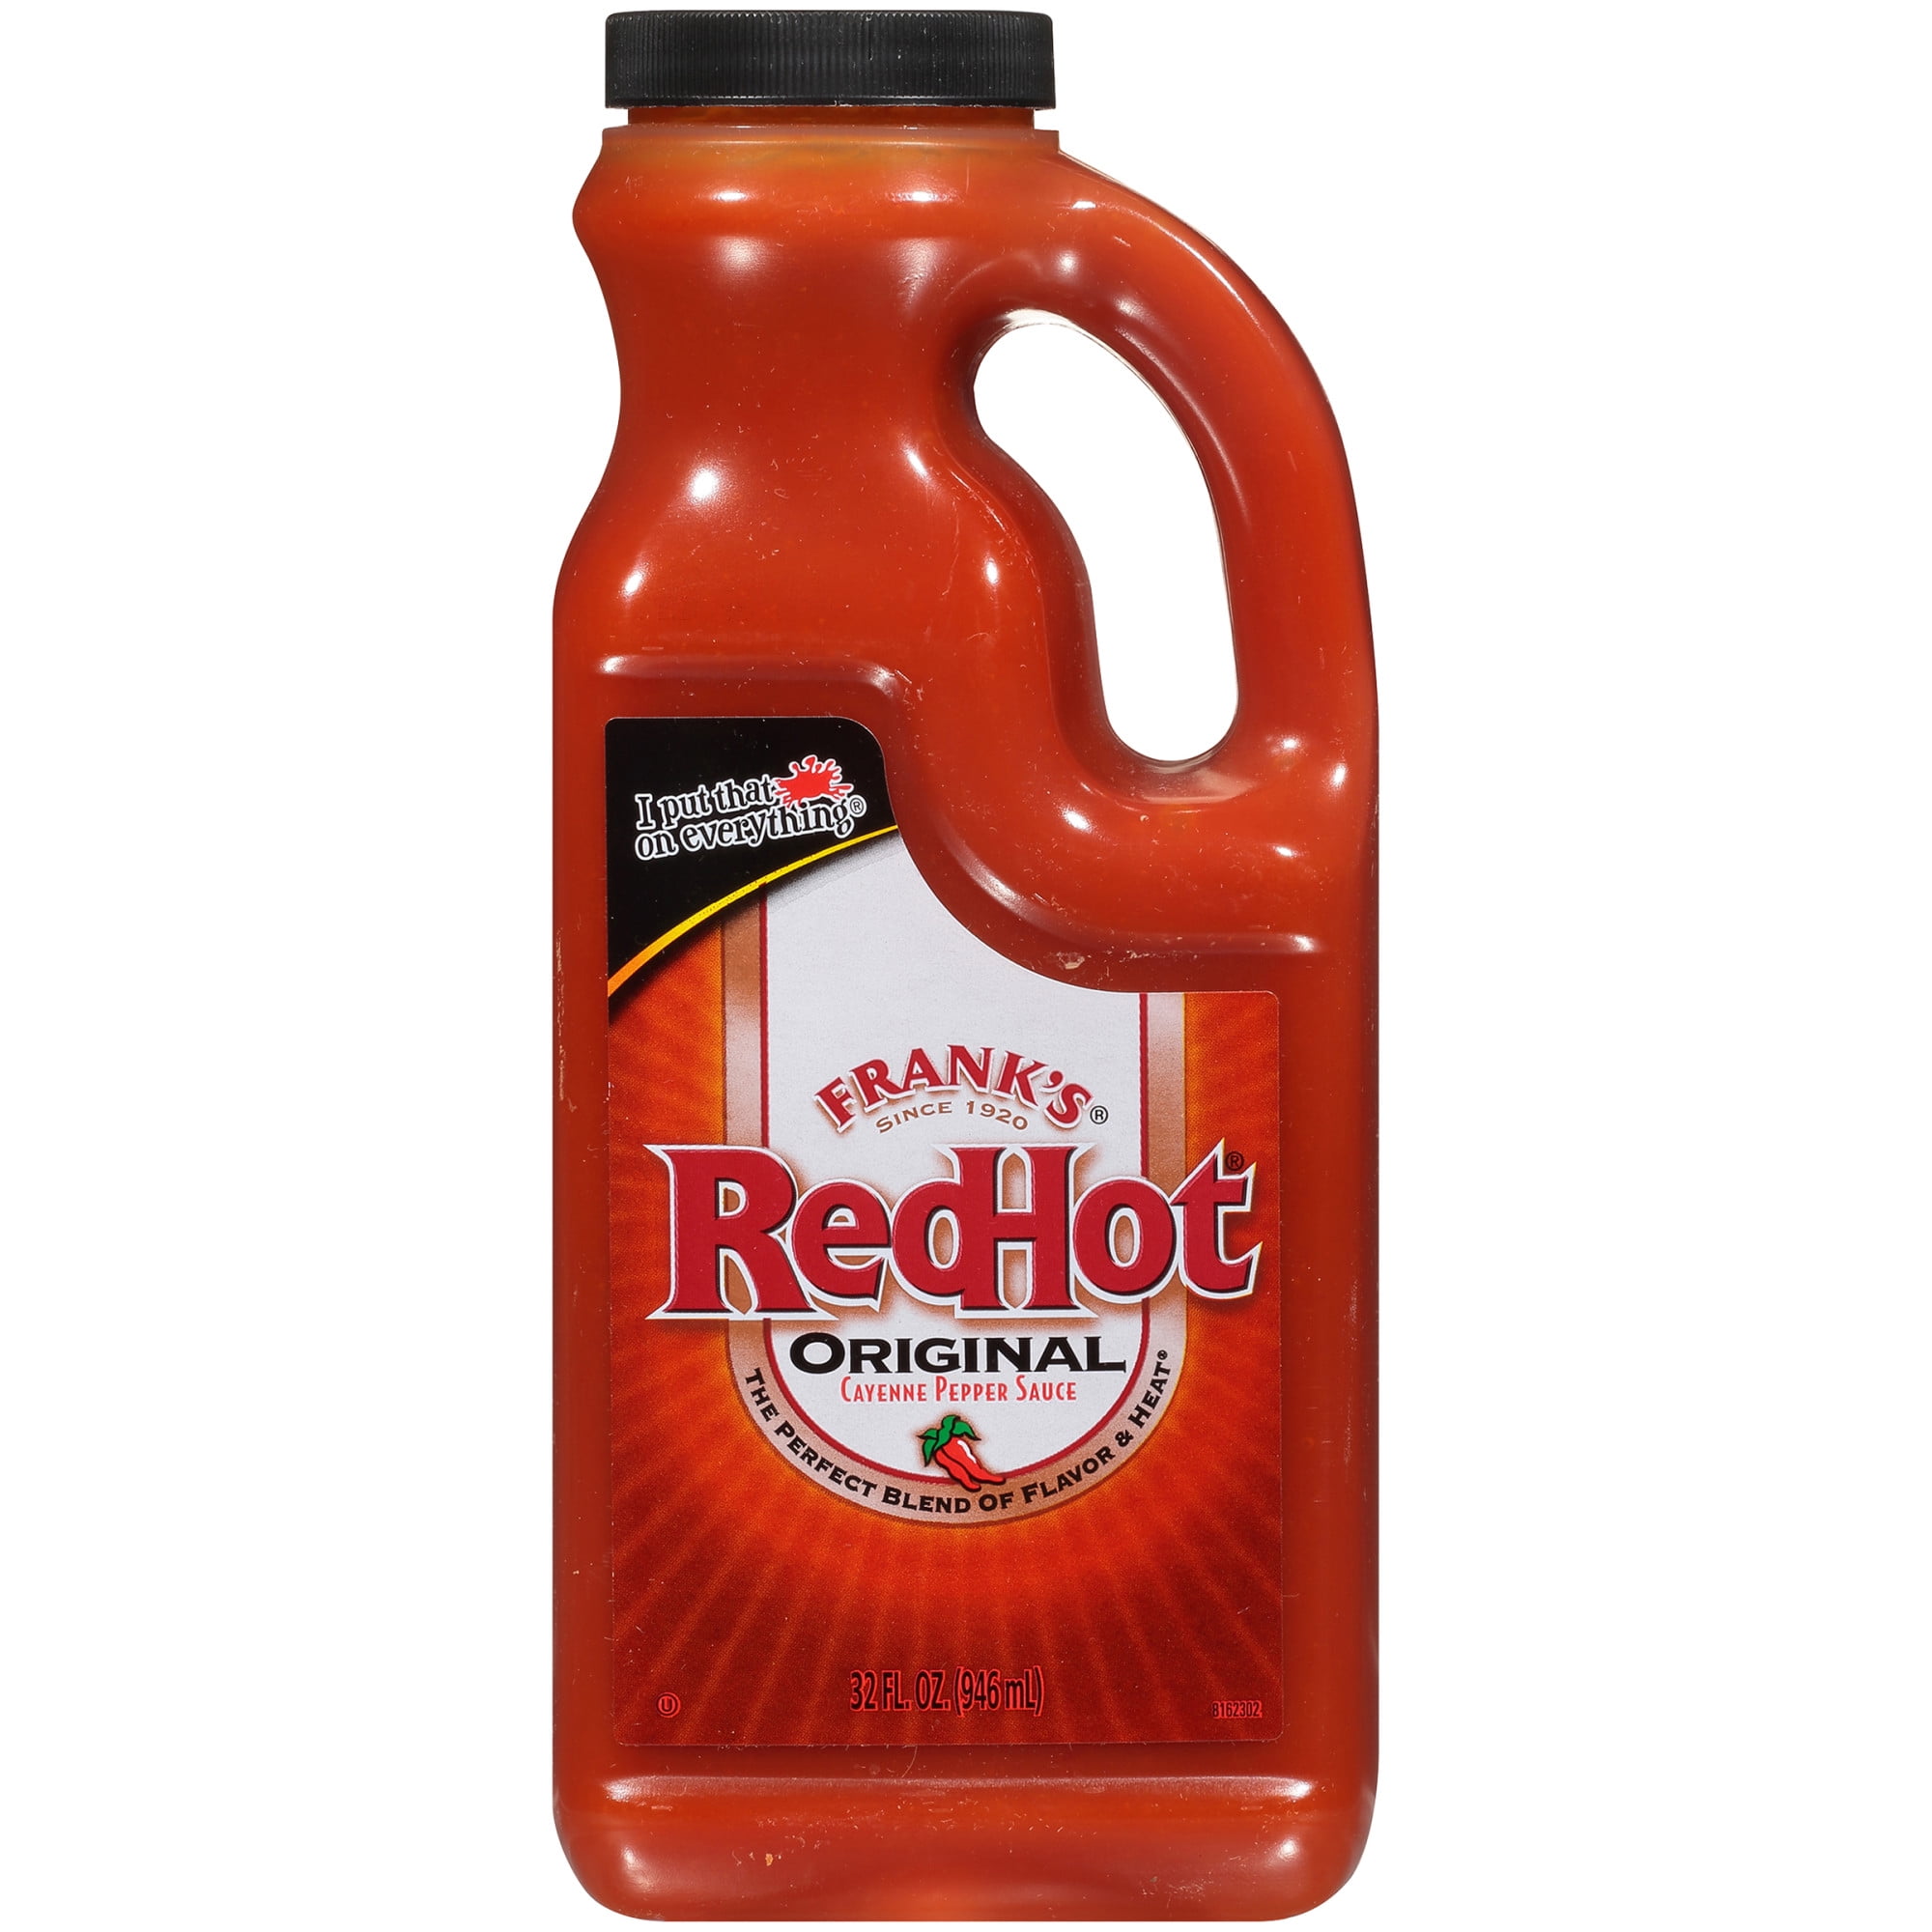 Frank's RedHot® Original Seasoning